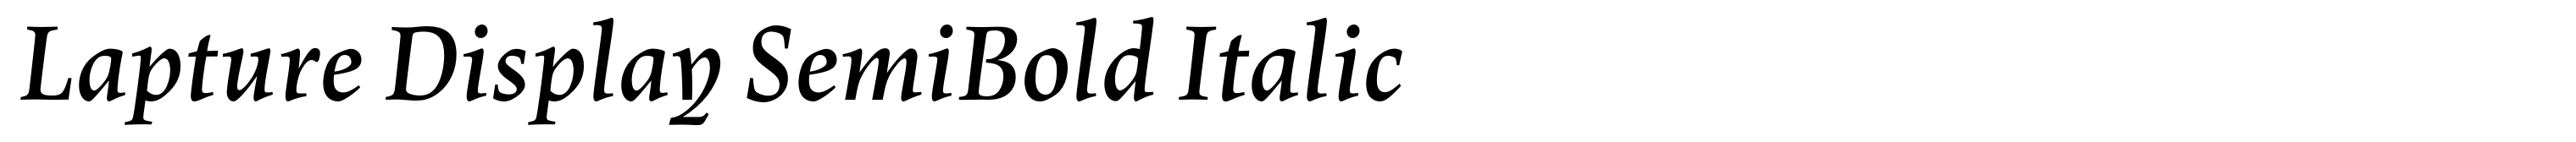 Lapture Display SemiBold Italic